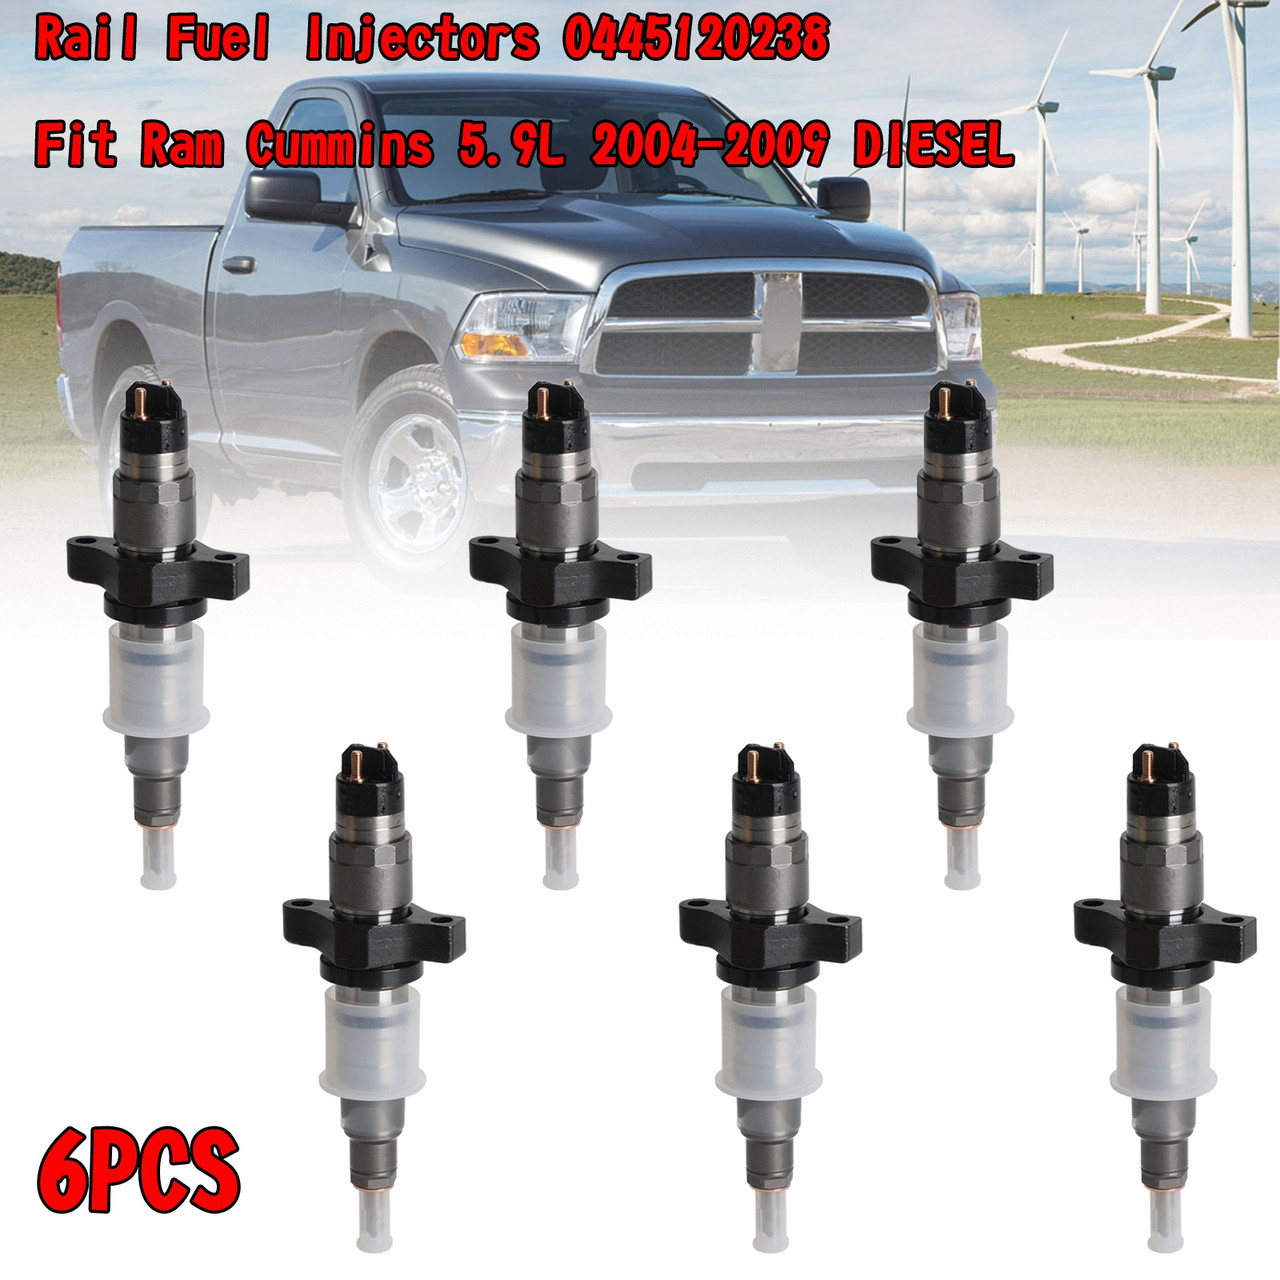 6PCS Rail Fuel Injectors 0445120238 Fit for Dodge Pick-up Ram Truck 5.9L Diesel Engine 05-09